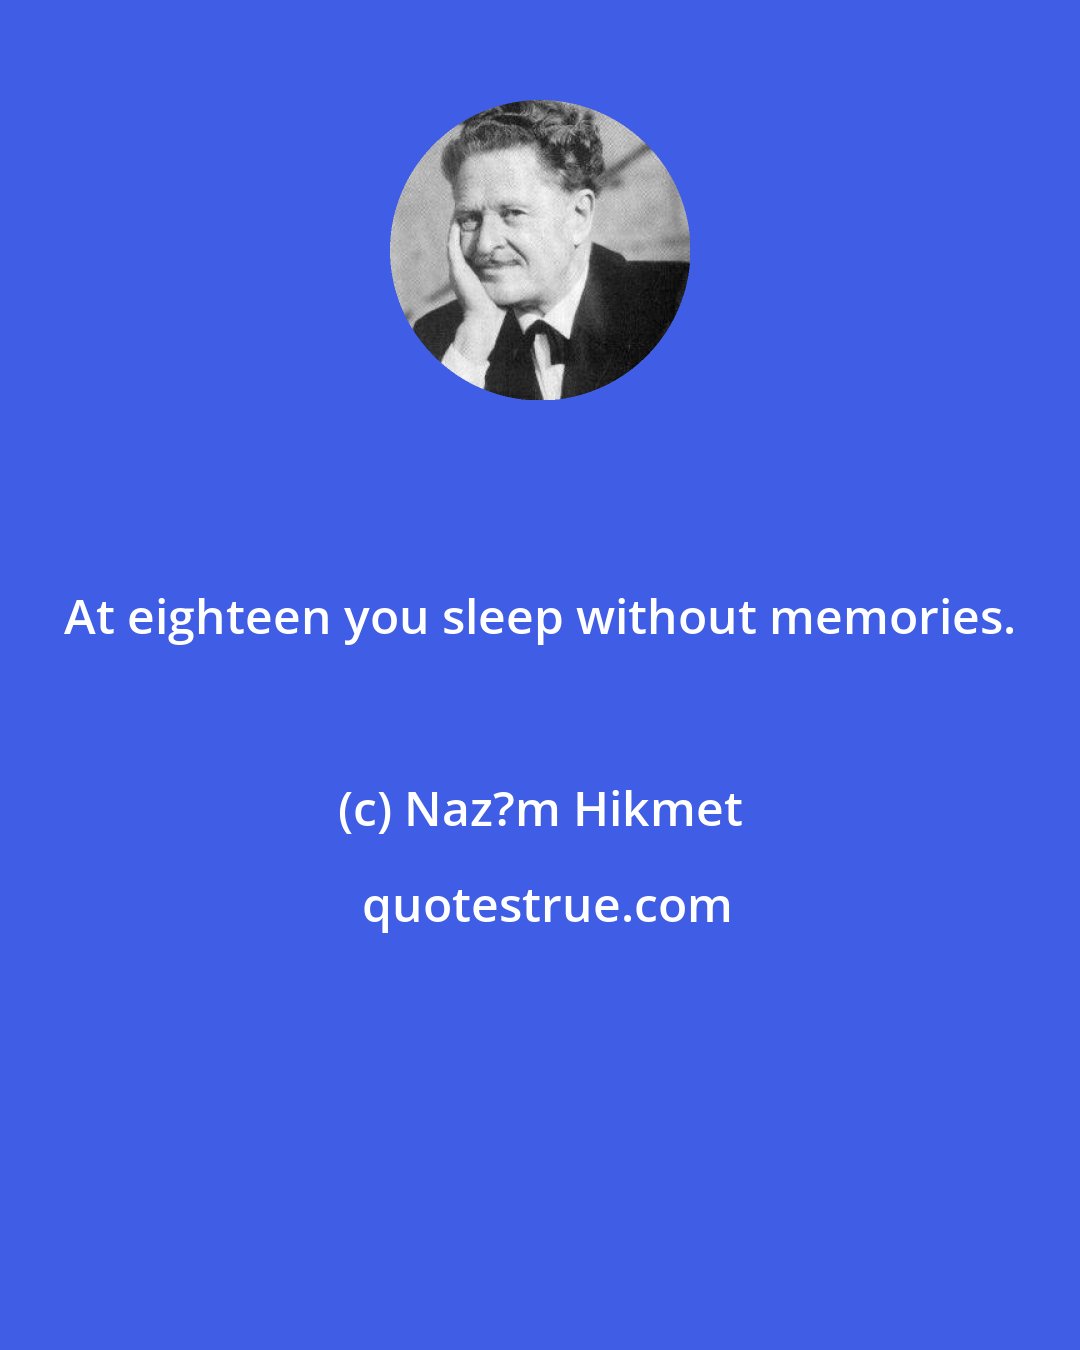 Naz?m Hikmet: At eighteen you sleep without memories.